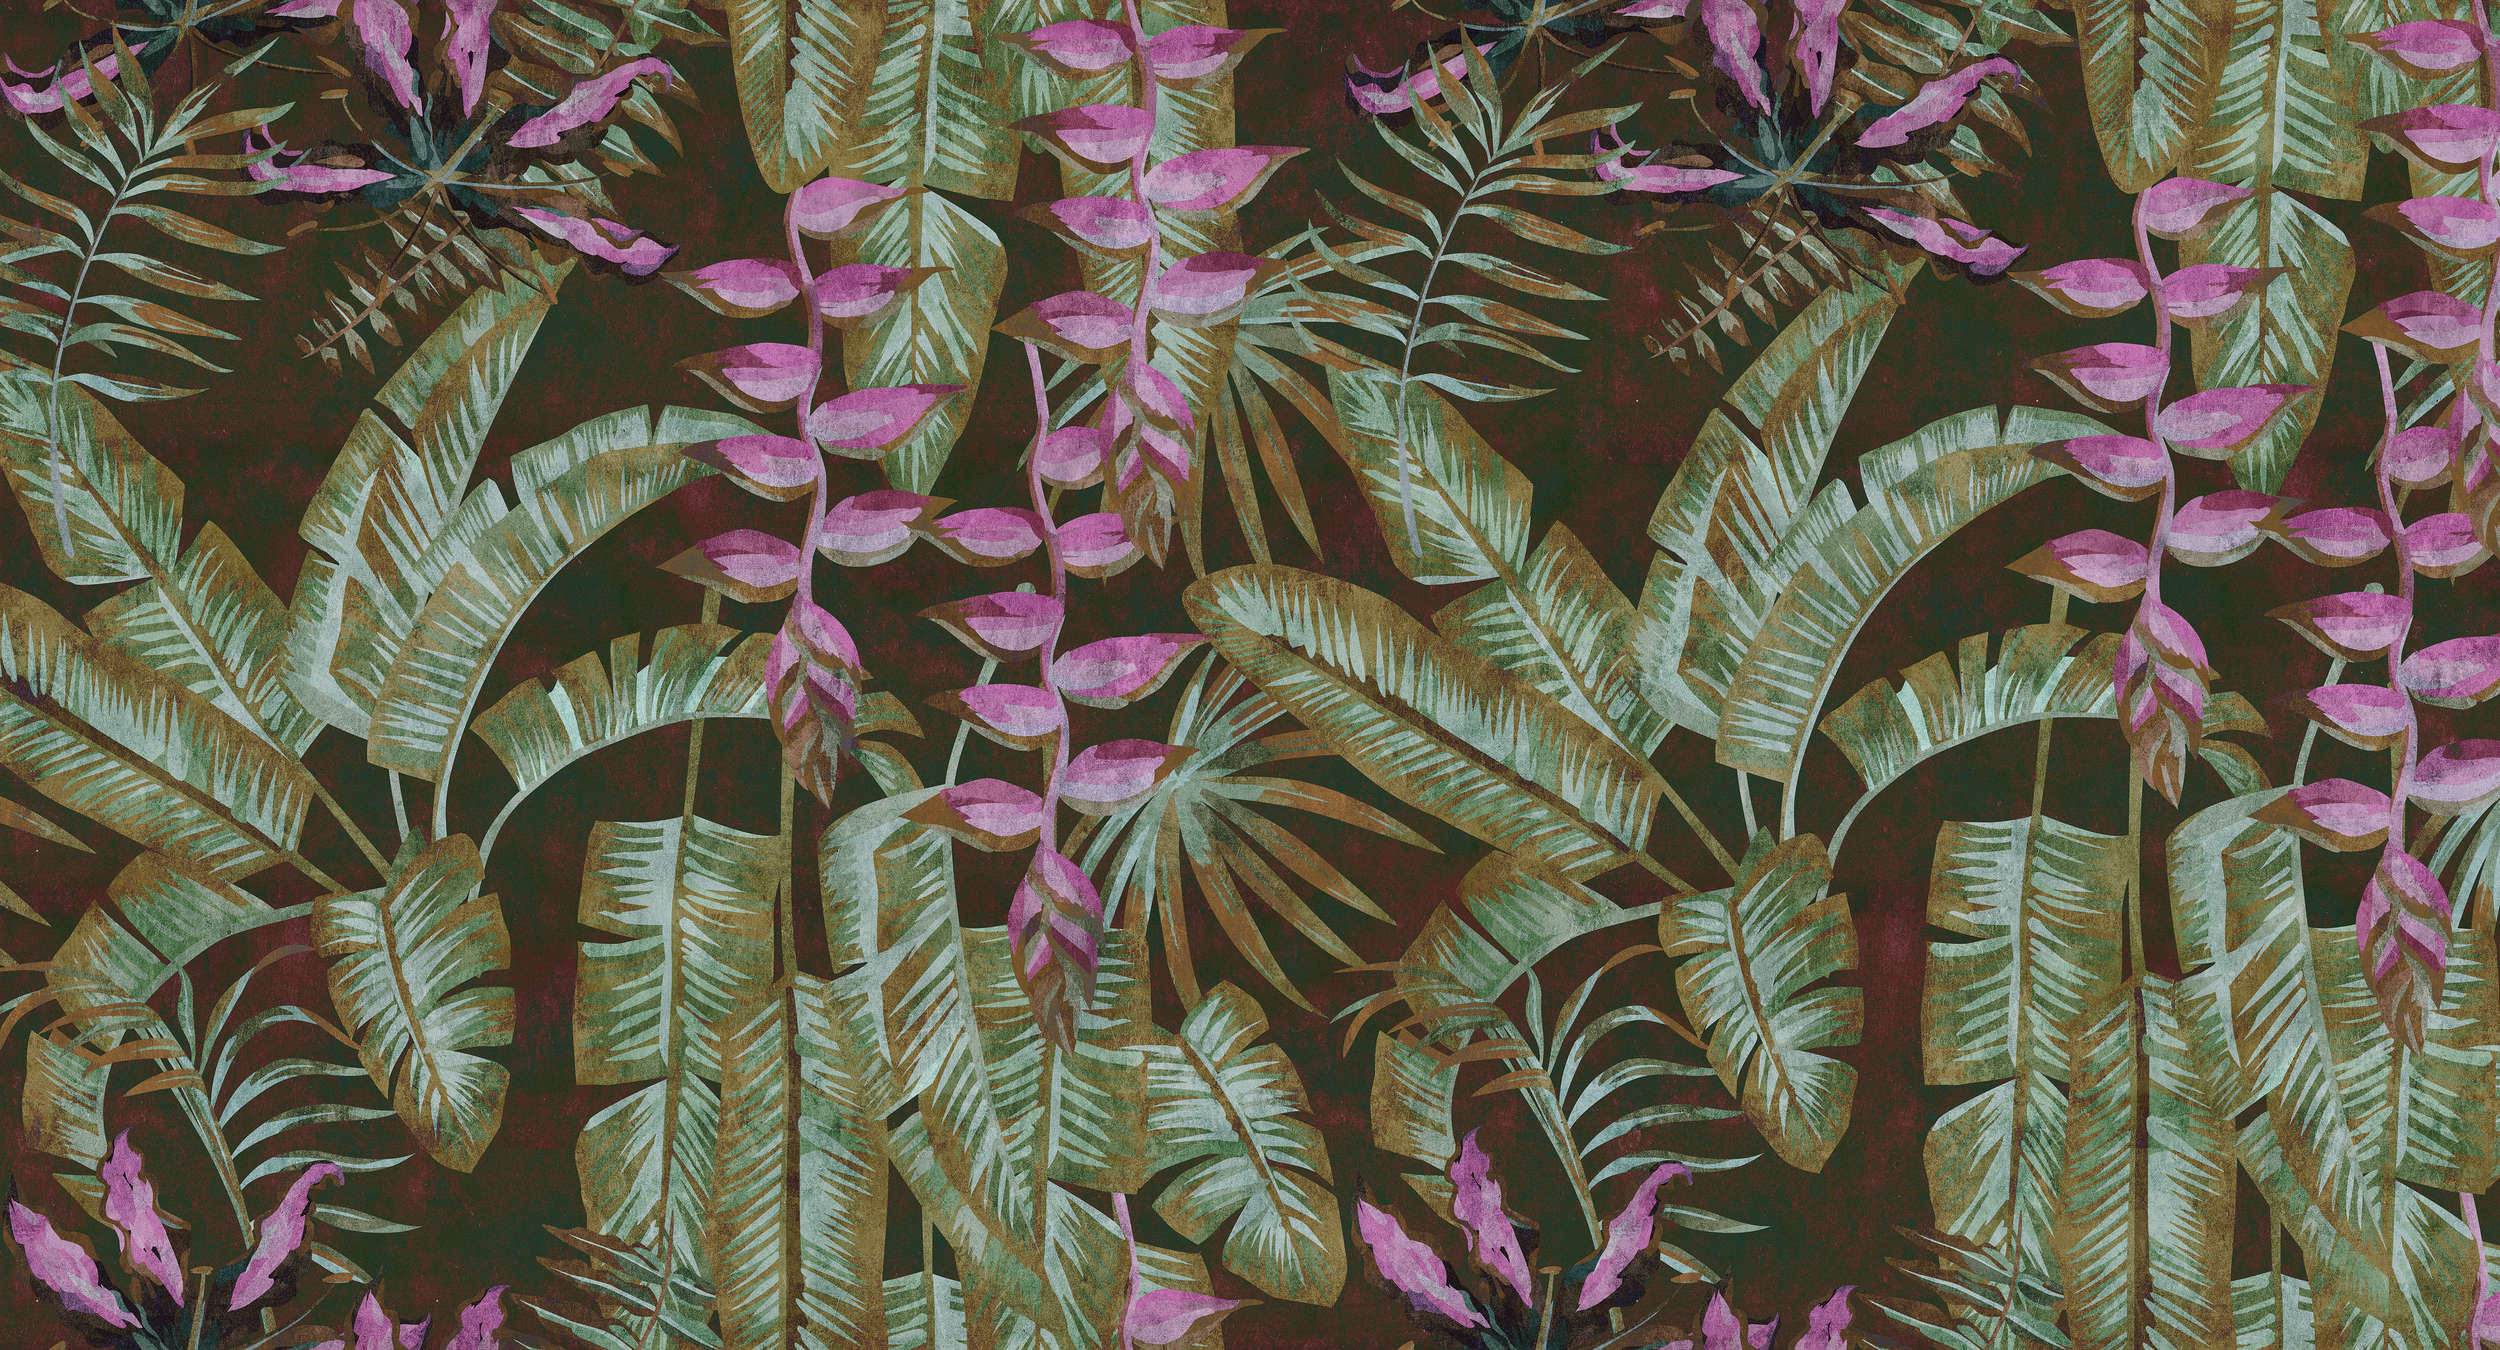             Tropicana 1 - Dschungel Fototapete mit Bananenblättern & Farnen-Löschpapier Struktur – Grün, Violett | Struktur Vlies
        